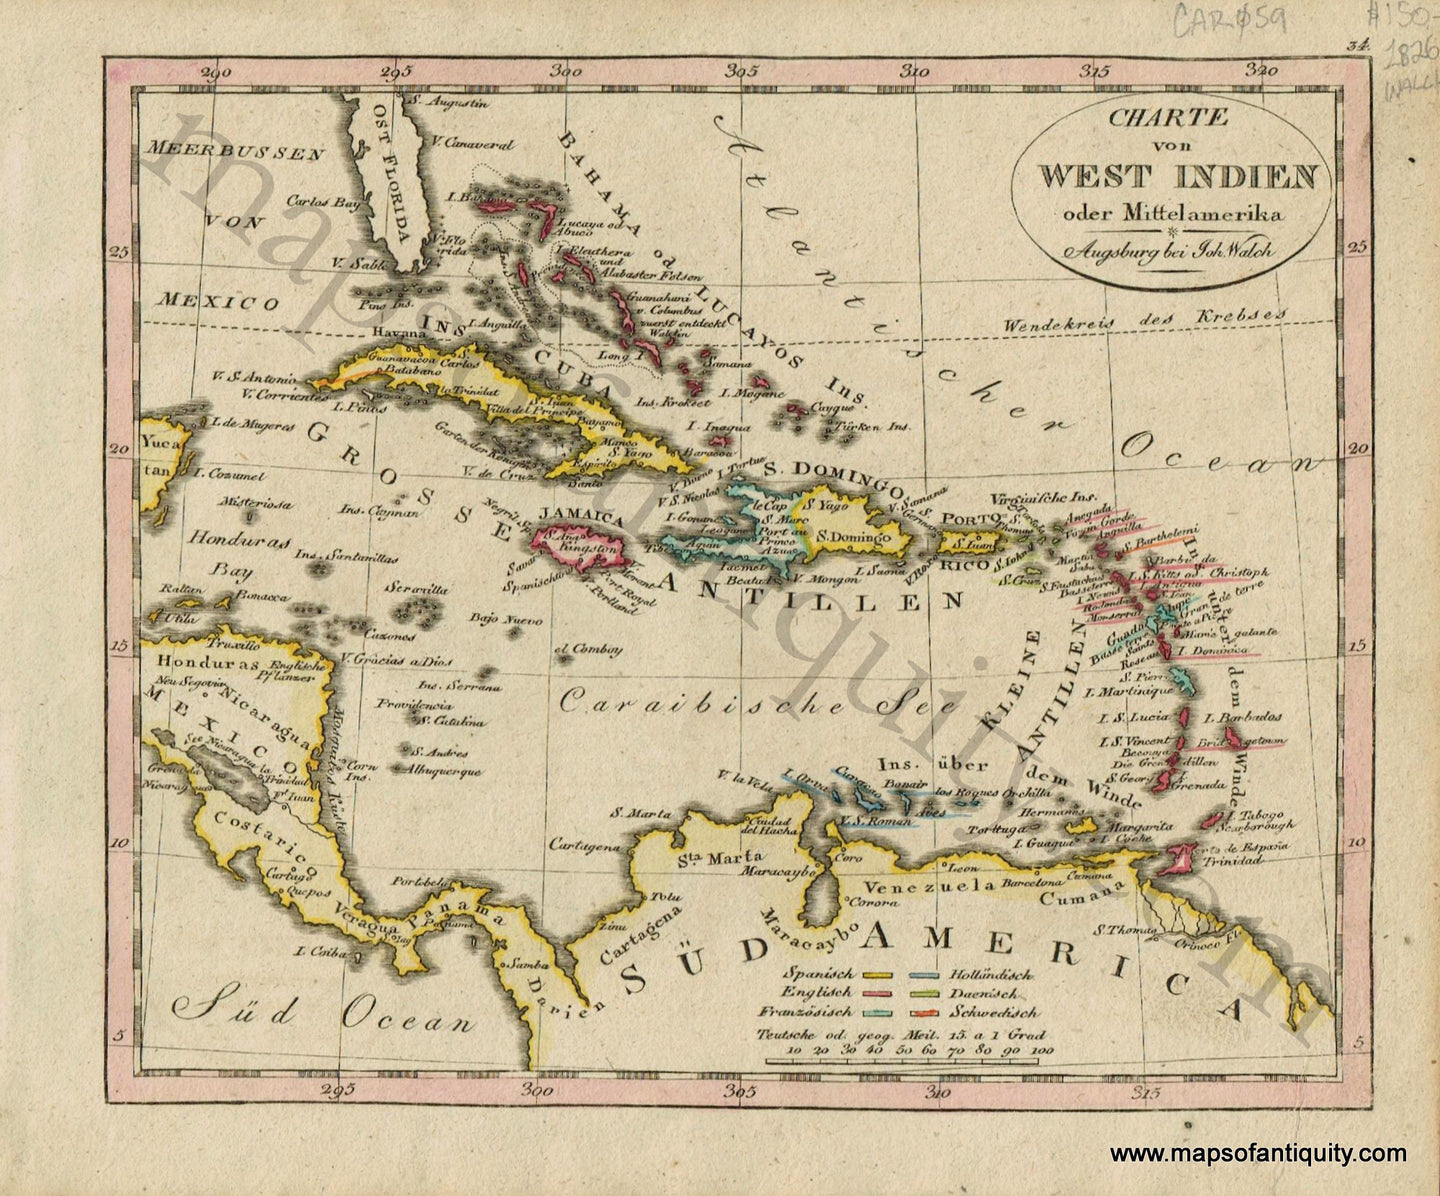 Antique-Charte-von-West-Indien-oder-Mittelamerika-West-India-Islands-Indies-Caribbean-German-Walch-Neuester-Schul-Atlass-1826-1820s-Early-19th-Century-Maps-of-Antiquity